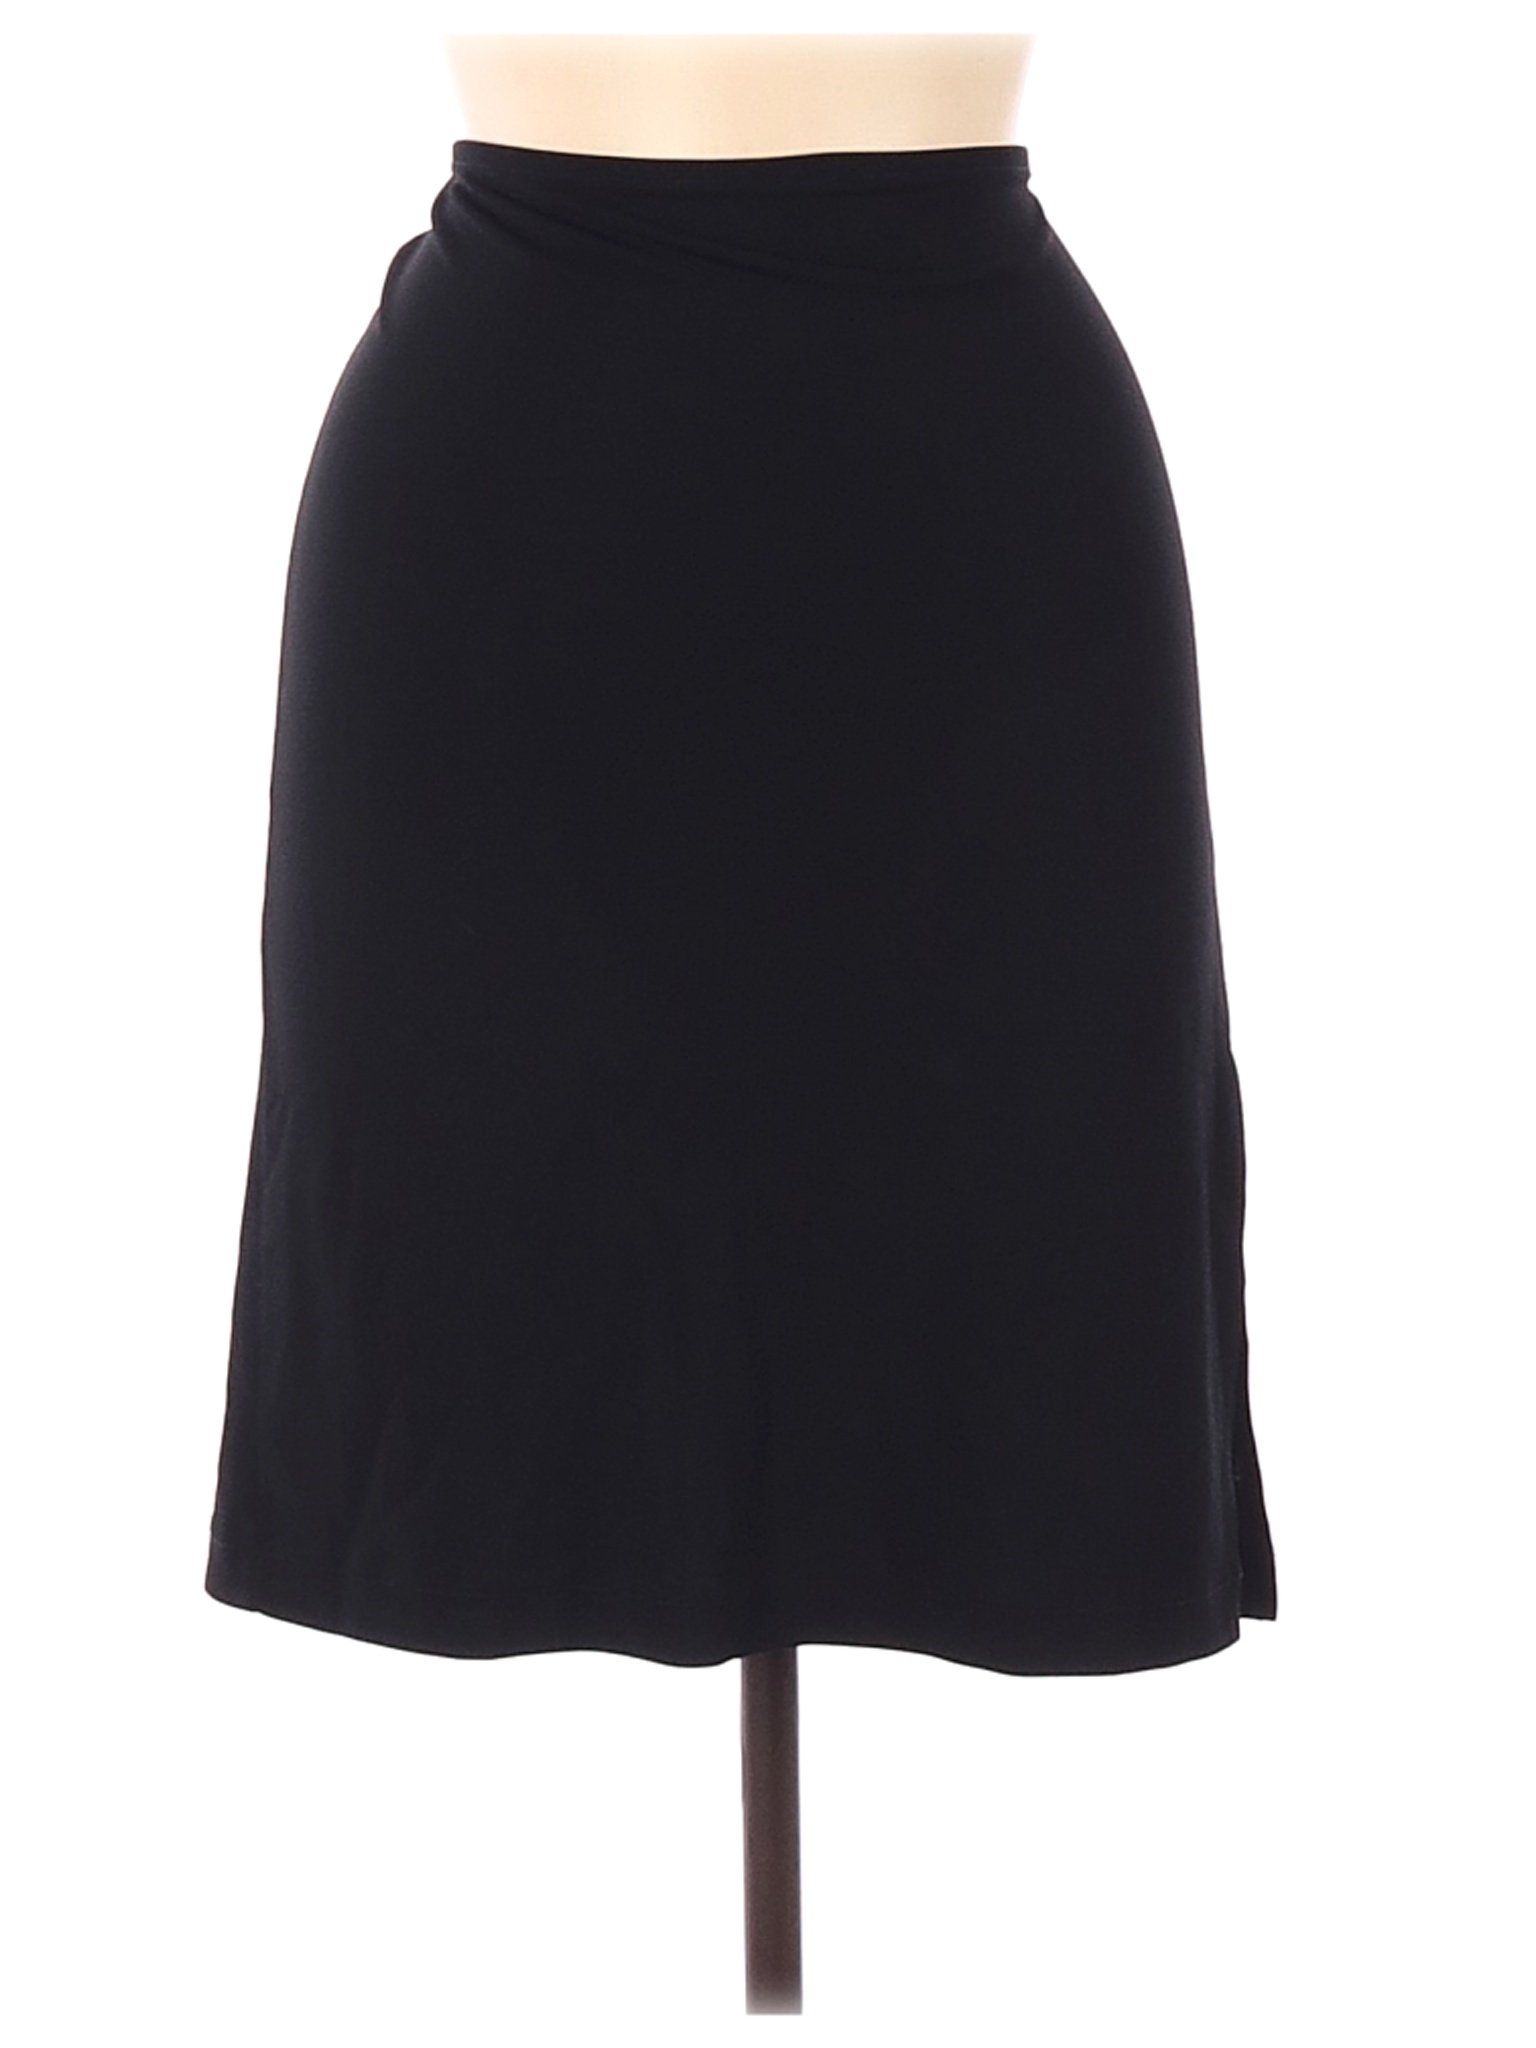 Gap Women Black Casual Skirt M | eBay